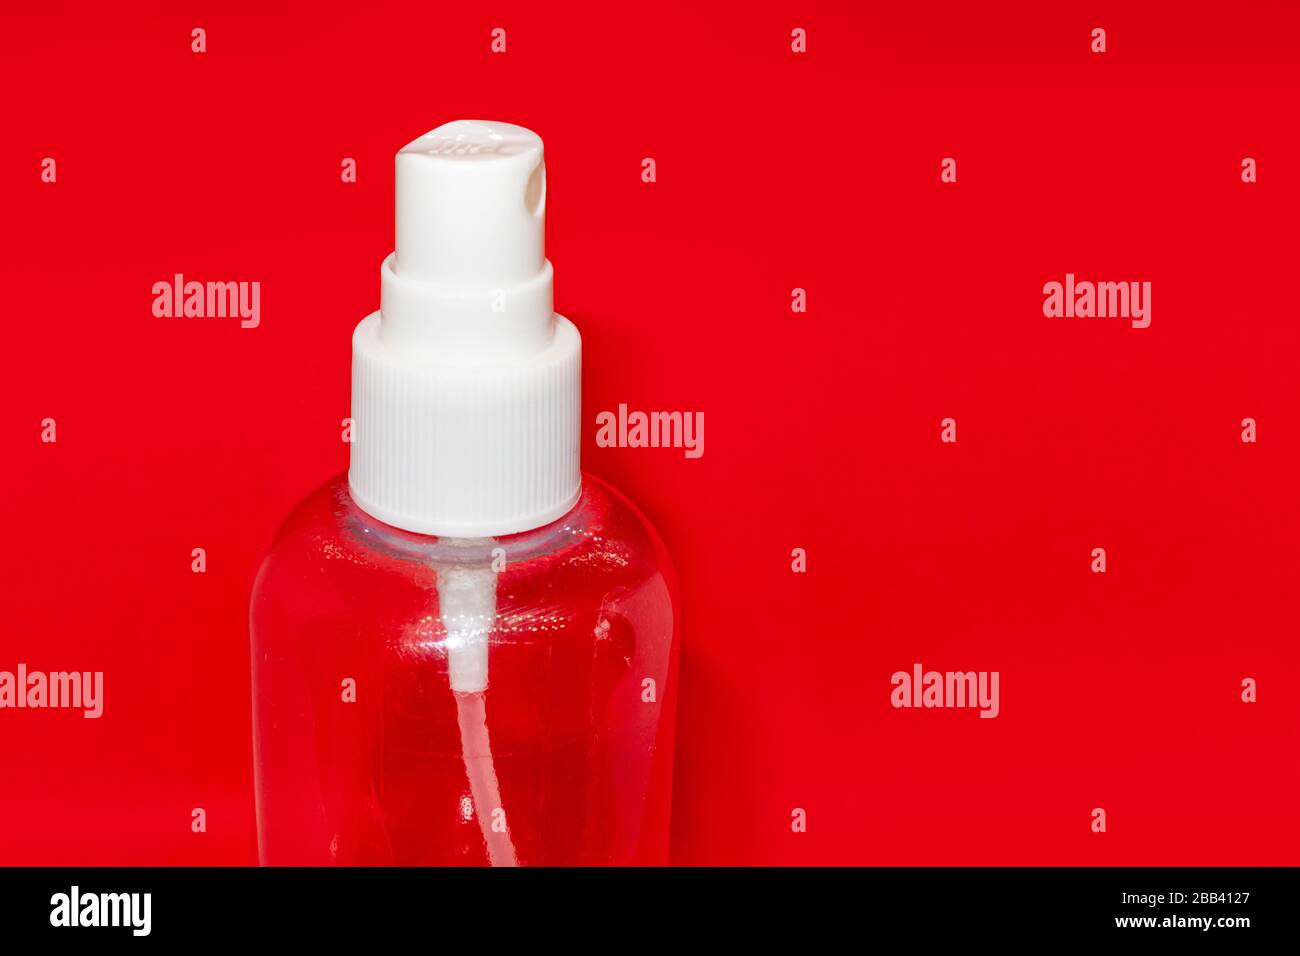 Spray trigger, white plastic pulverizer on red background. Sanitize spray cosmetics trigger. Aerosol transparent bottle close up. Clean care dispenser Stock Photo